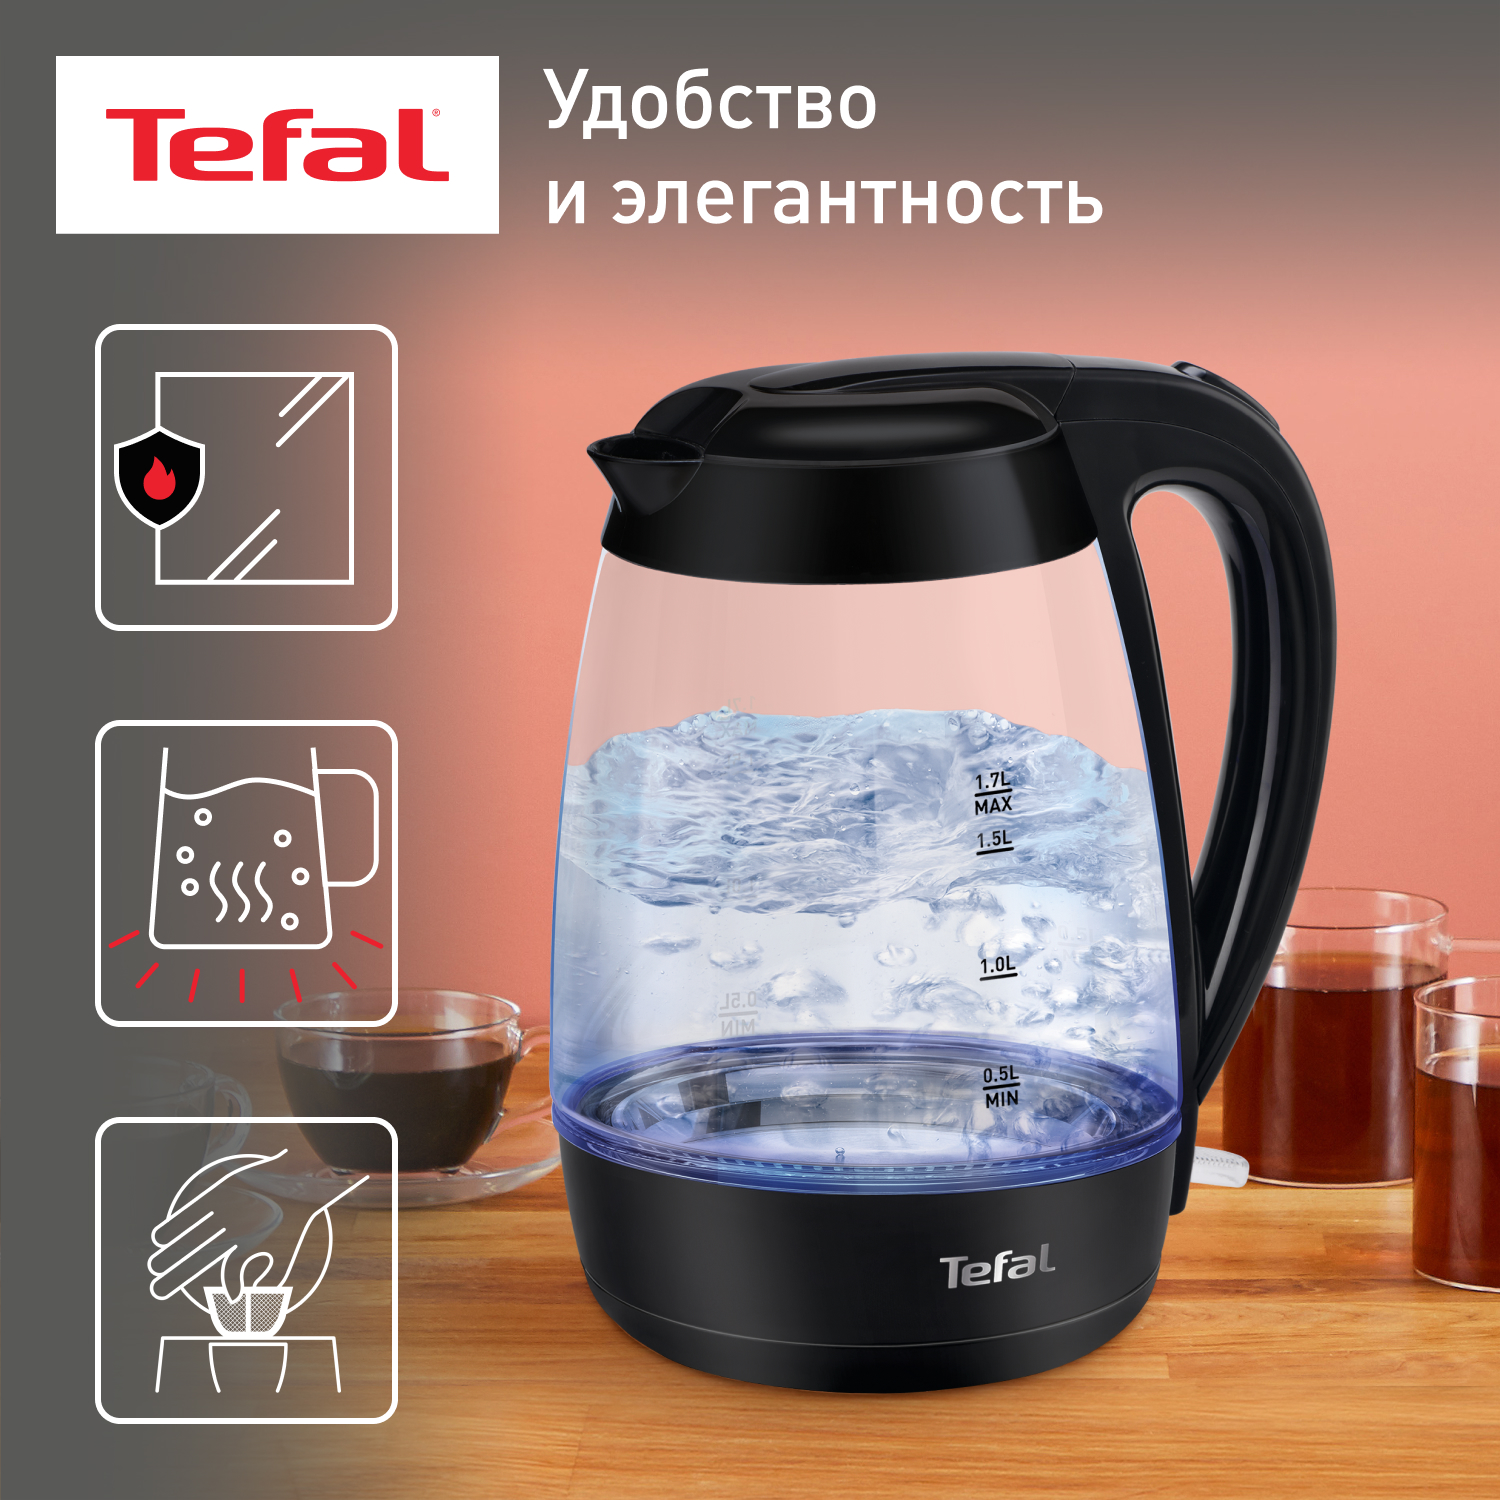 Чайник электрический Tefal Glass KO450832, 1.7 л, черный чайник электрический tefal glass kettle ki760d30 1 7 л серебристый